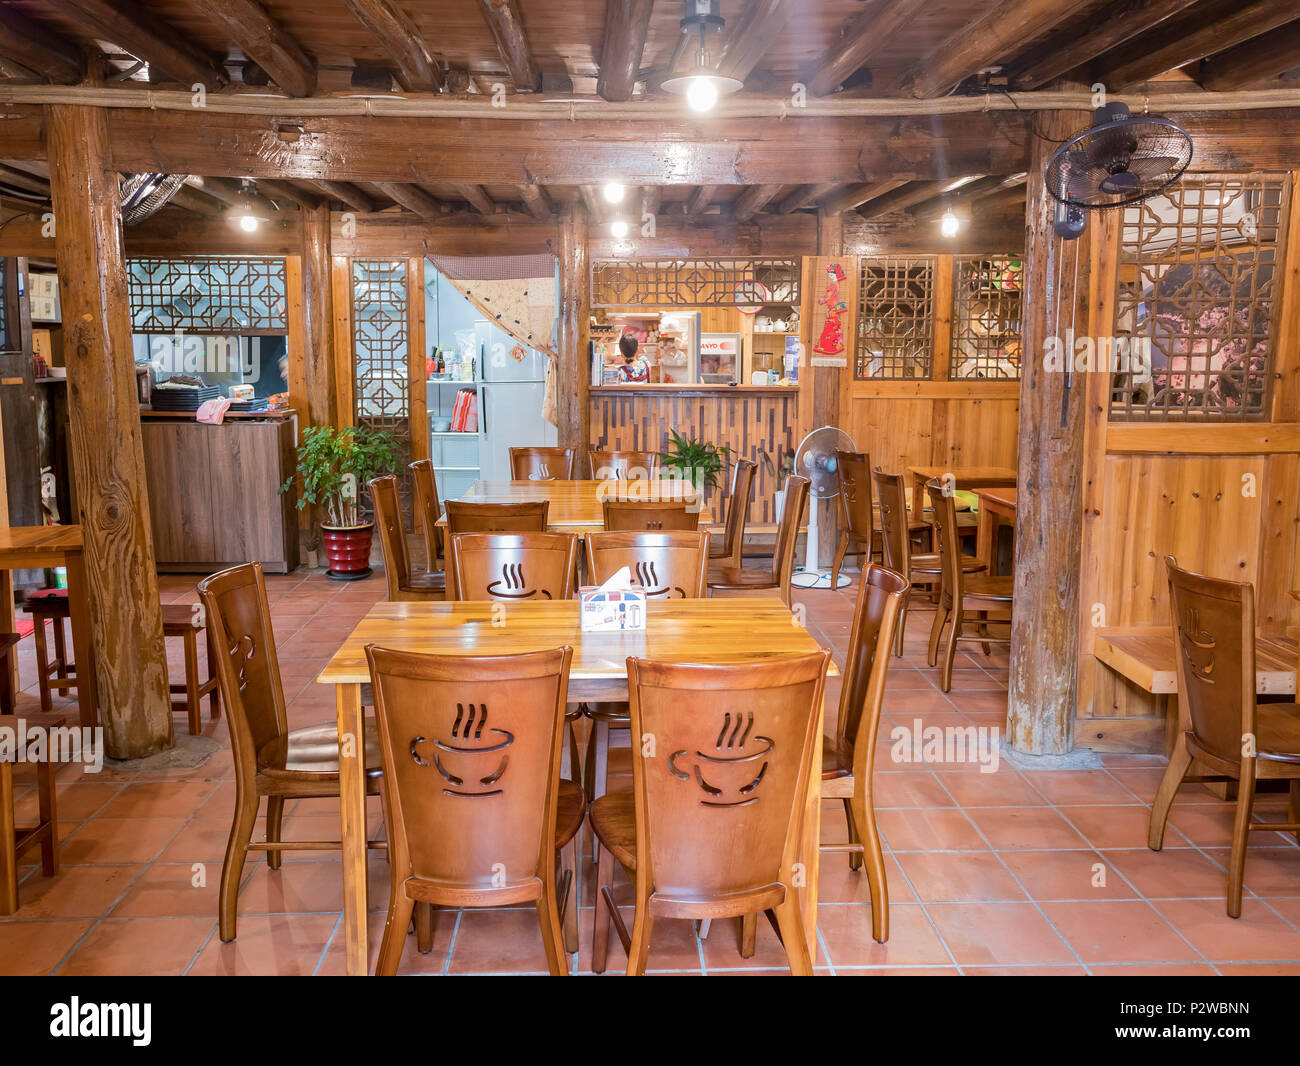 Matsu, JUN 1: Interior view of a restaurant on JUN 1, 2018 at Matsu, Taiwan Stock Photo